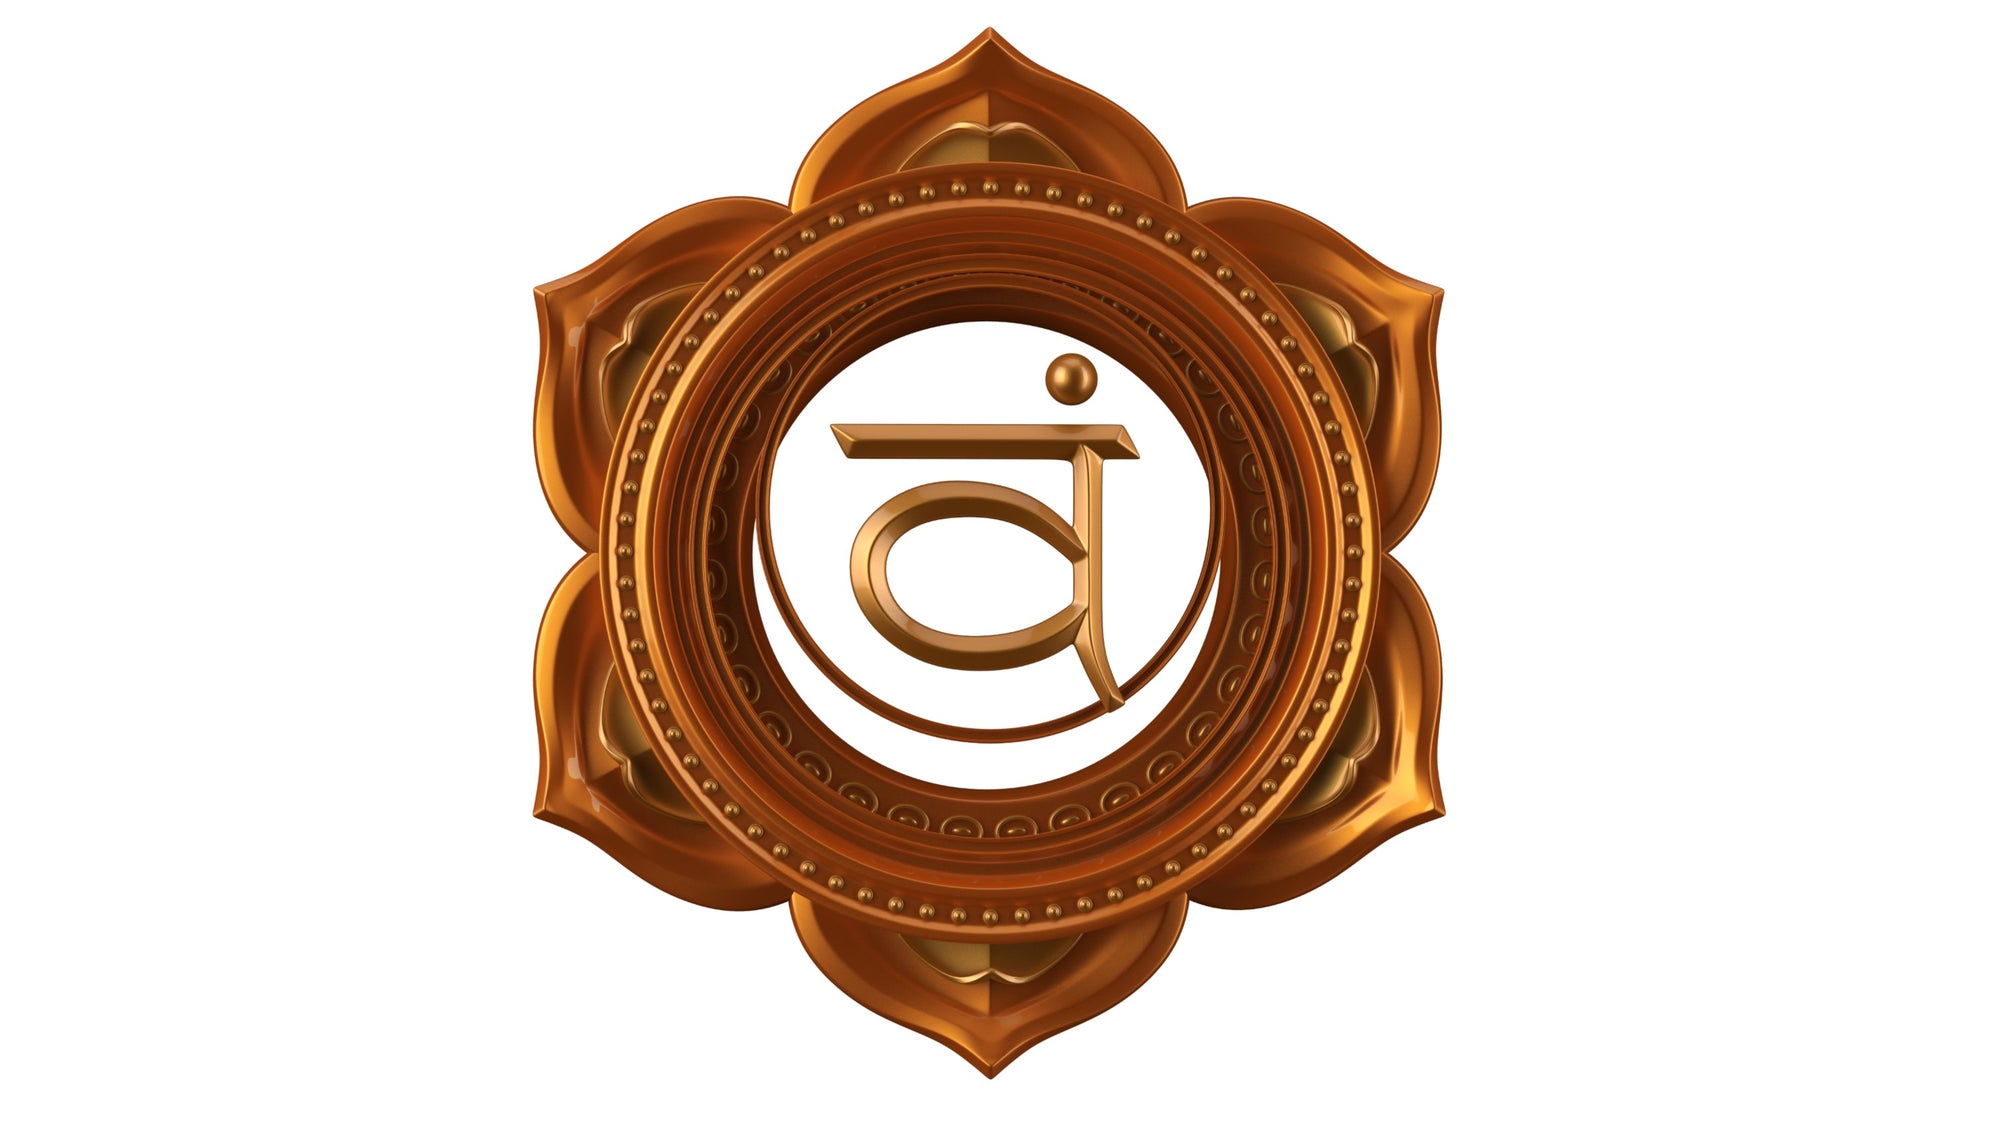 Image of Svadhisthana the second Chakras symbol